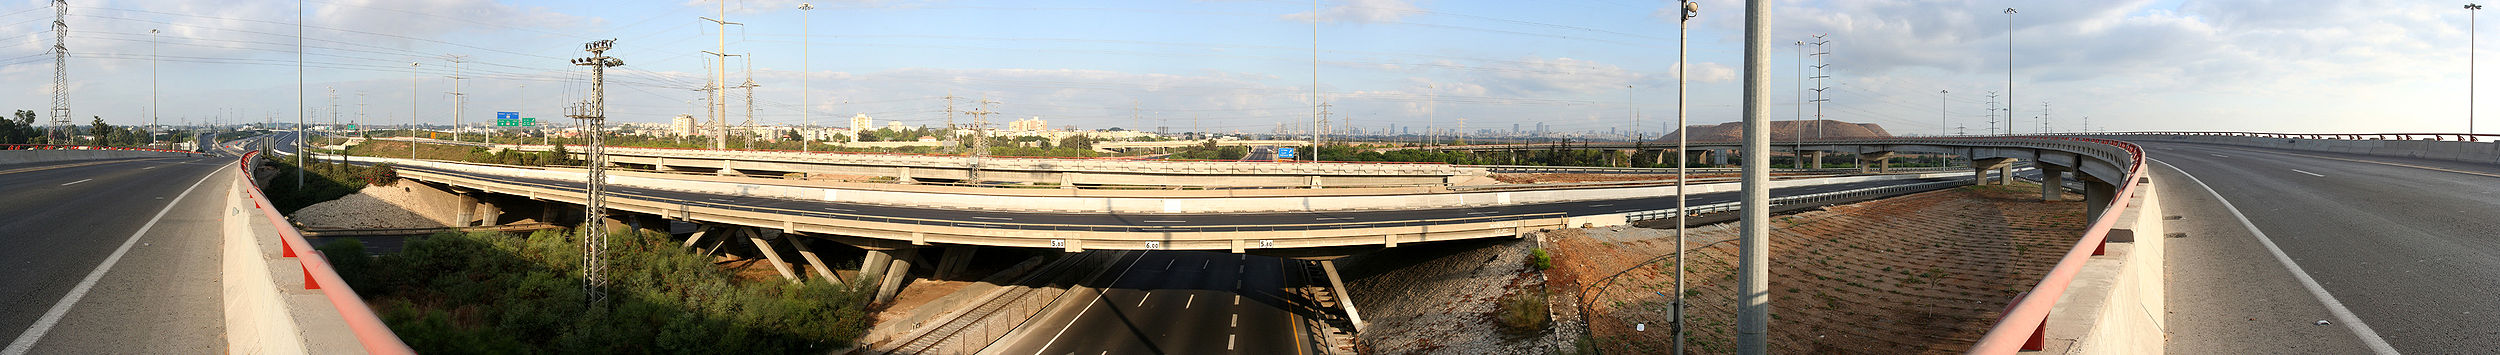 Панорама шоссе 4 в районе развязки Ганот в Йом Кипур 2007 года